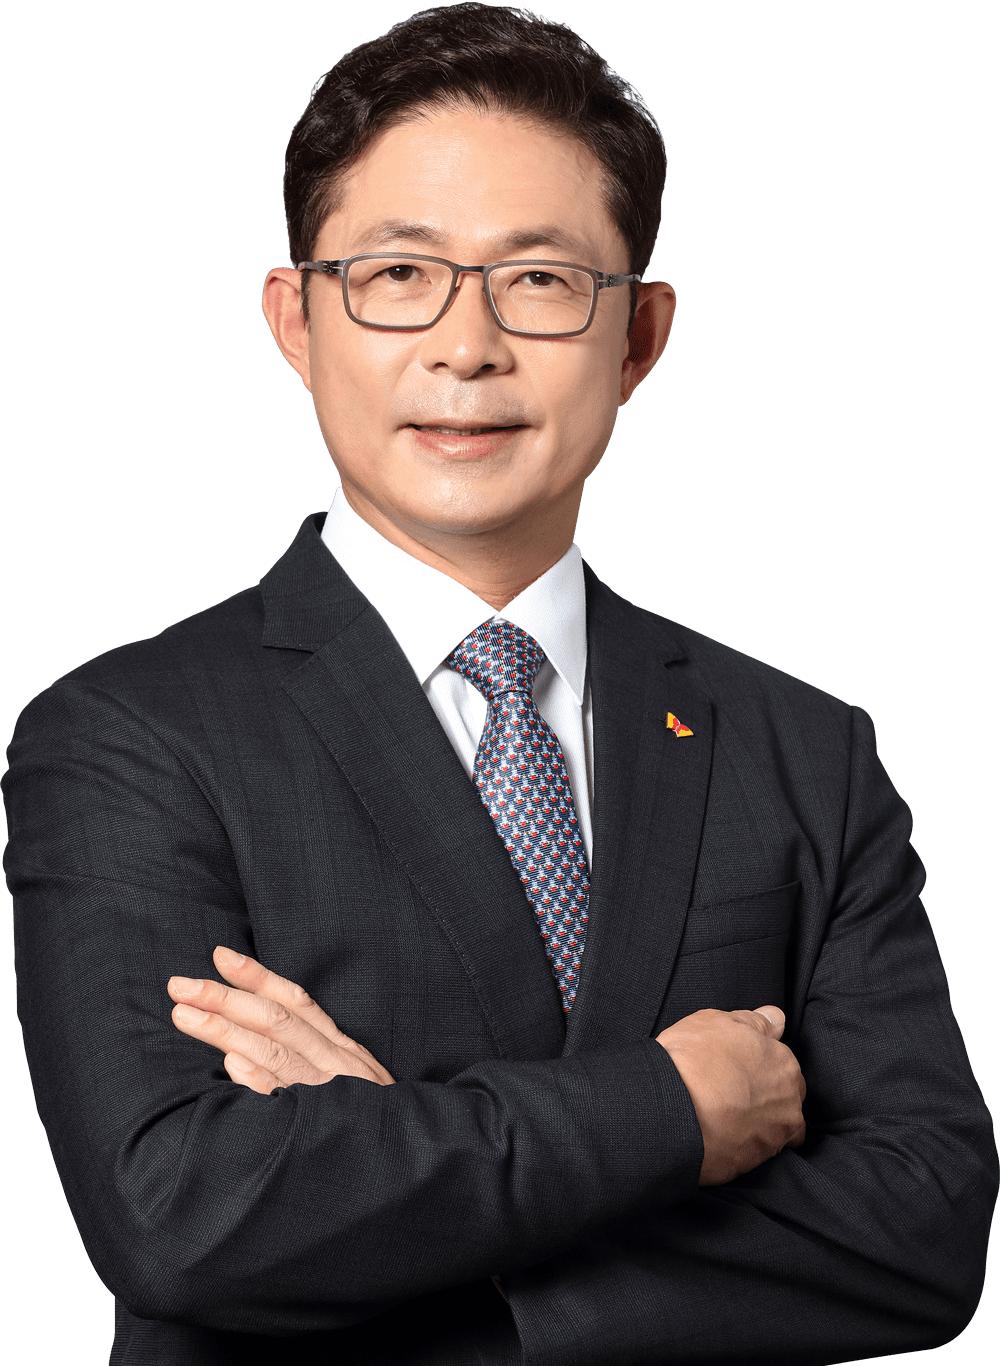 Chief Executive Officer, SK bioscience, Ahn Jae-yong image